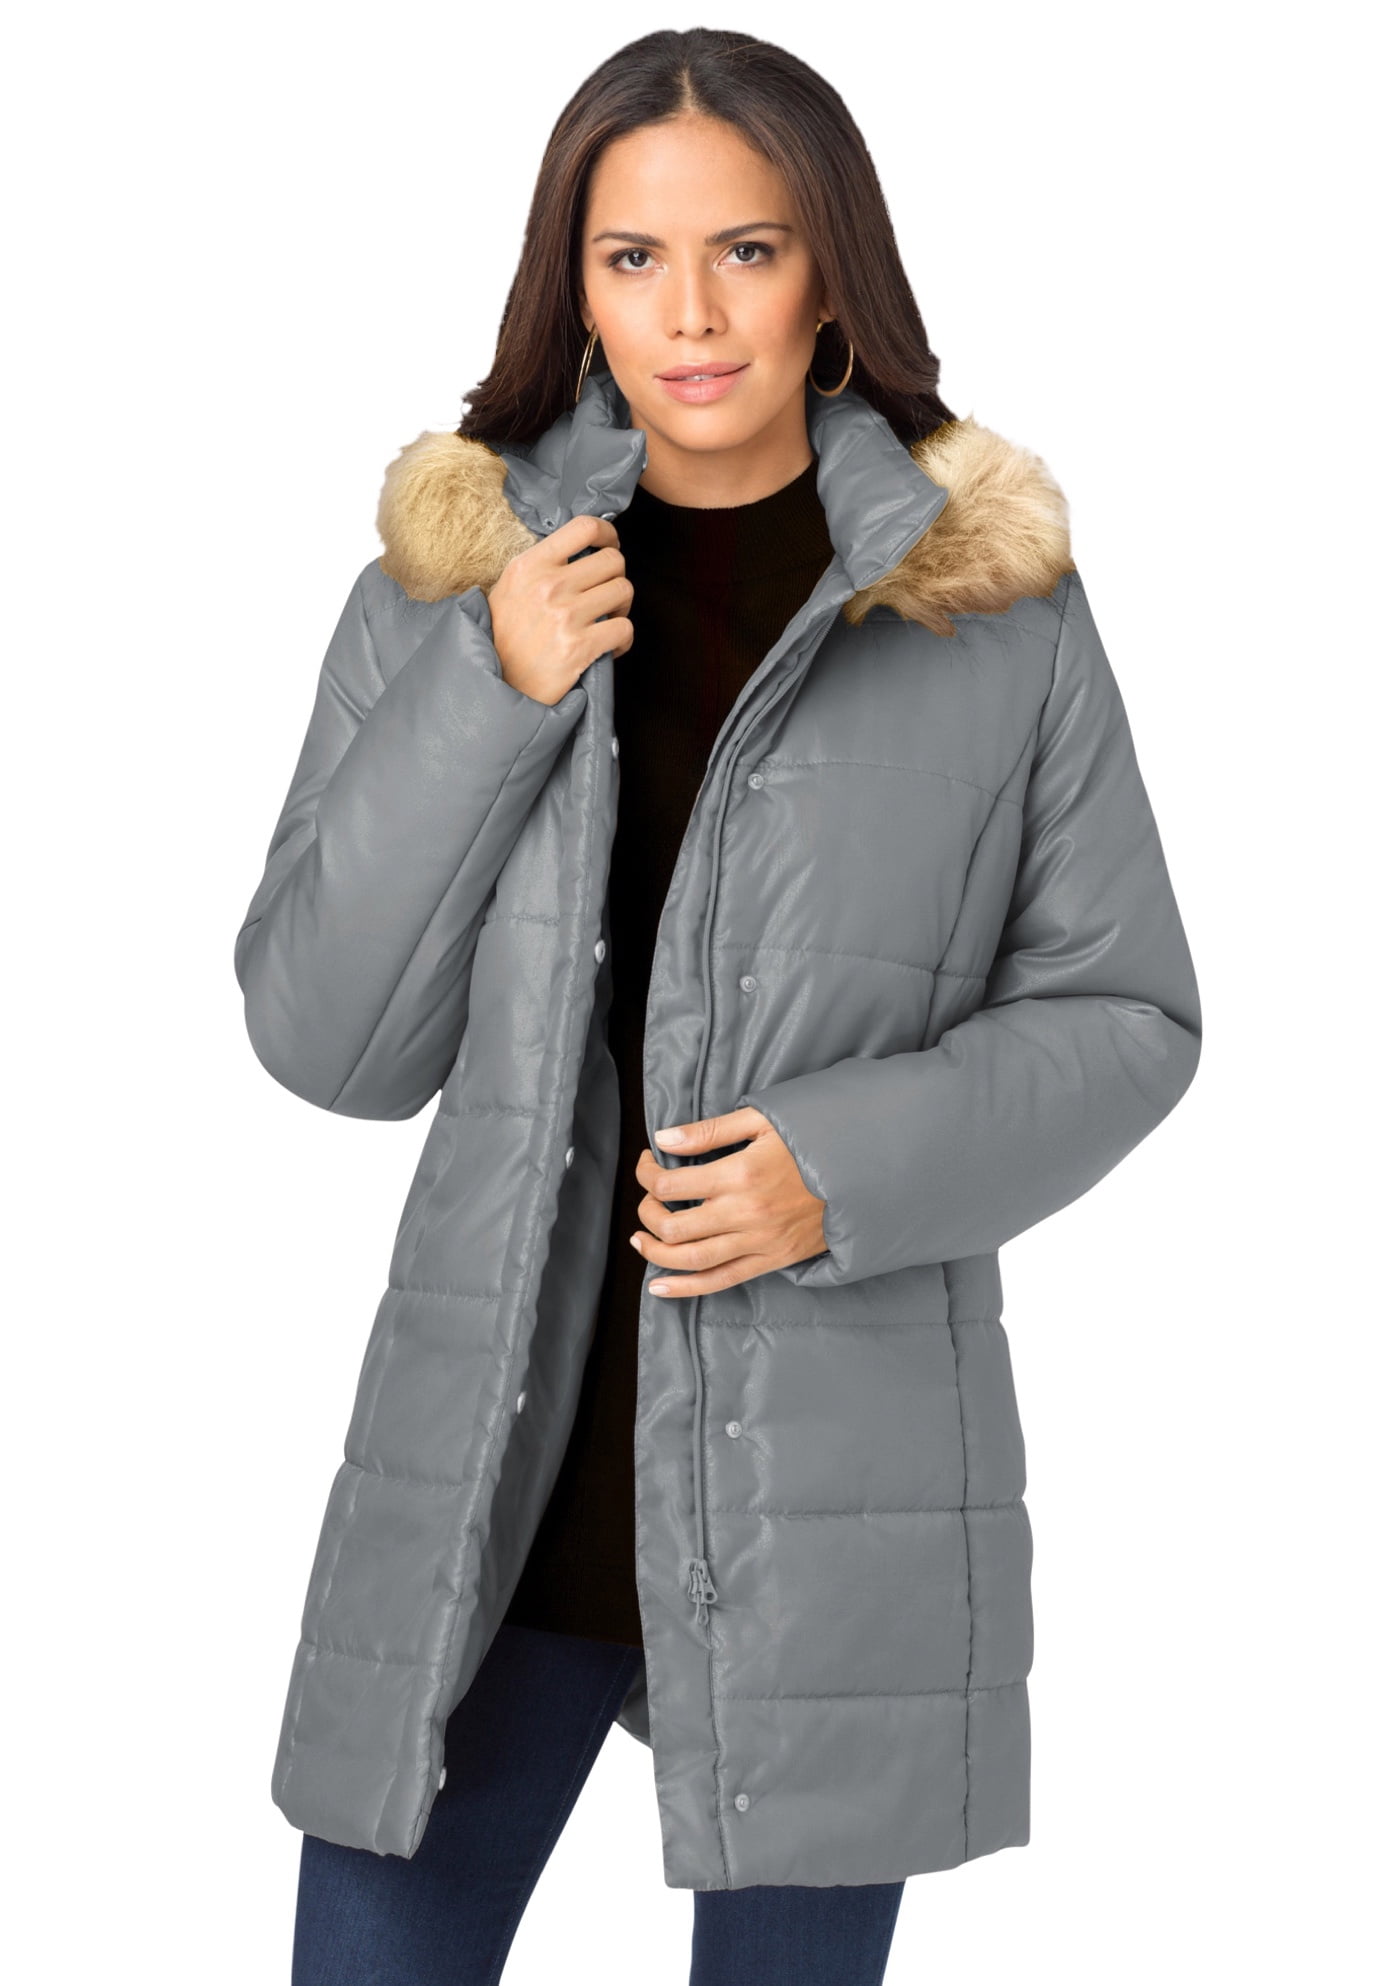 ACE SHOCK Winter Coat Women Knee Length Adult Hooded Cotton Padded Park Plus Size Jacket Black Grey 